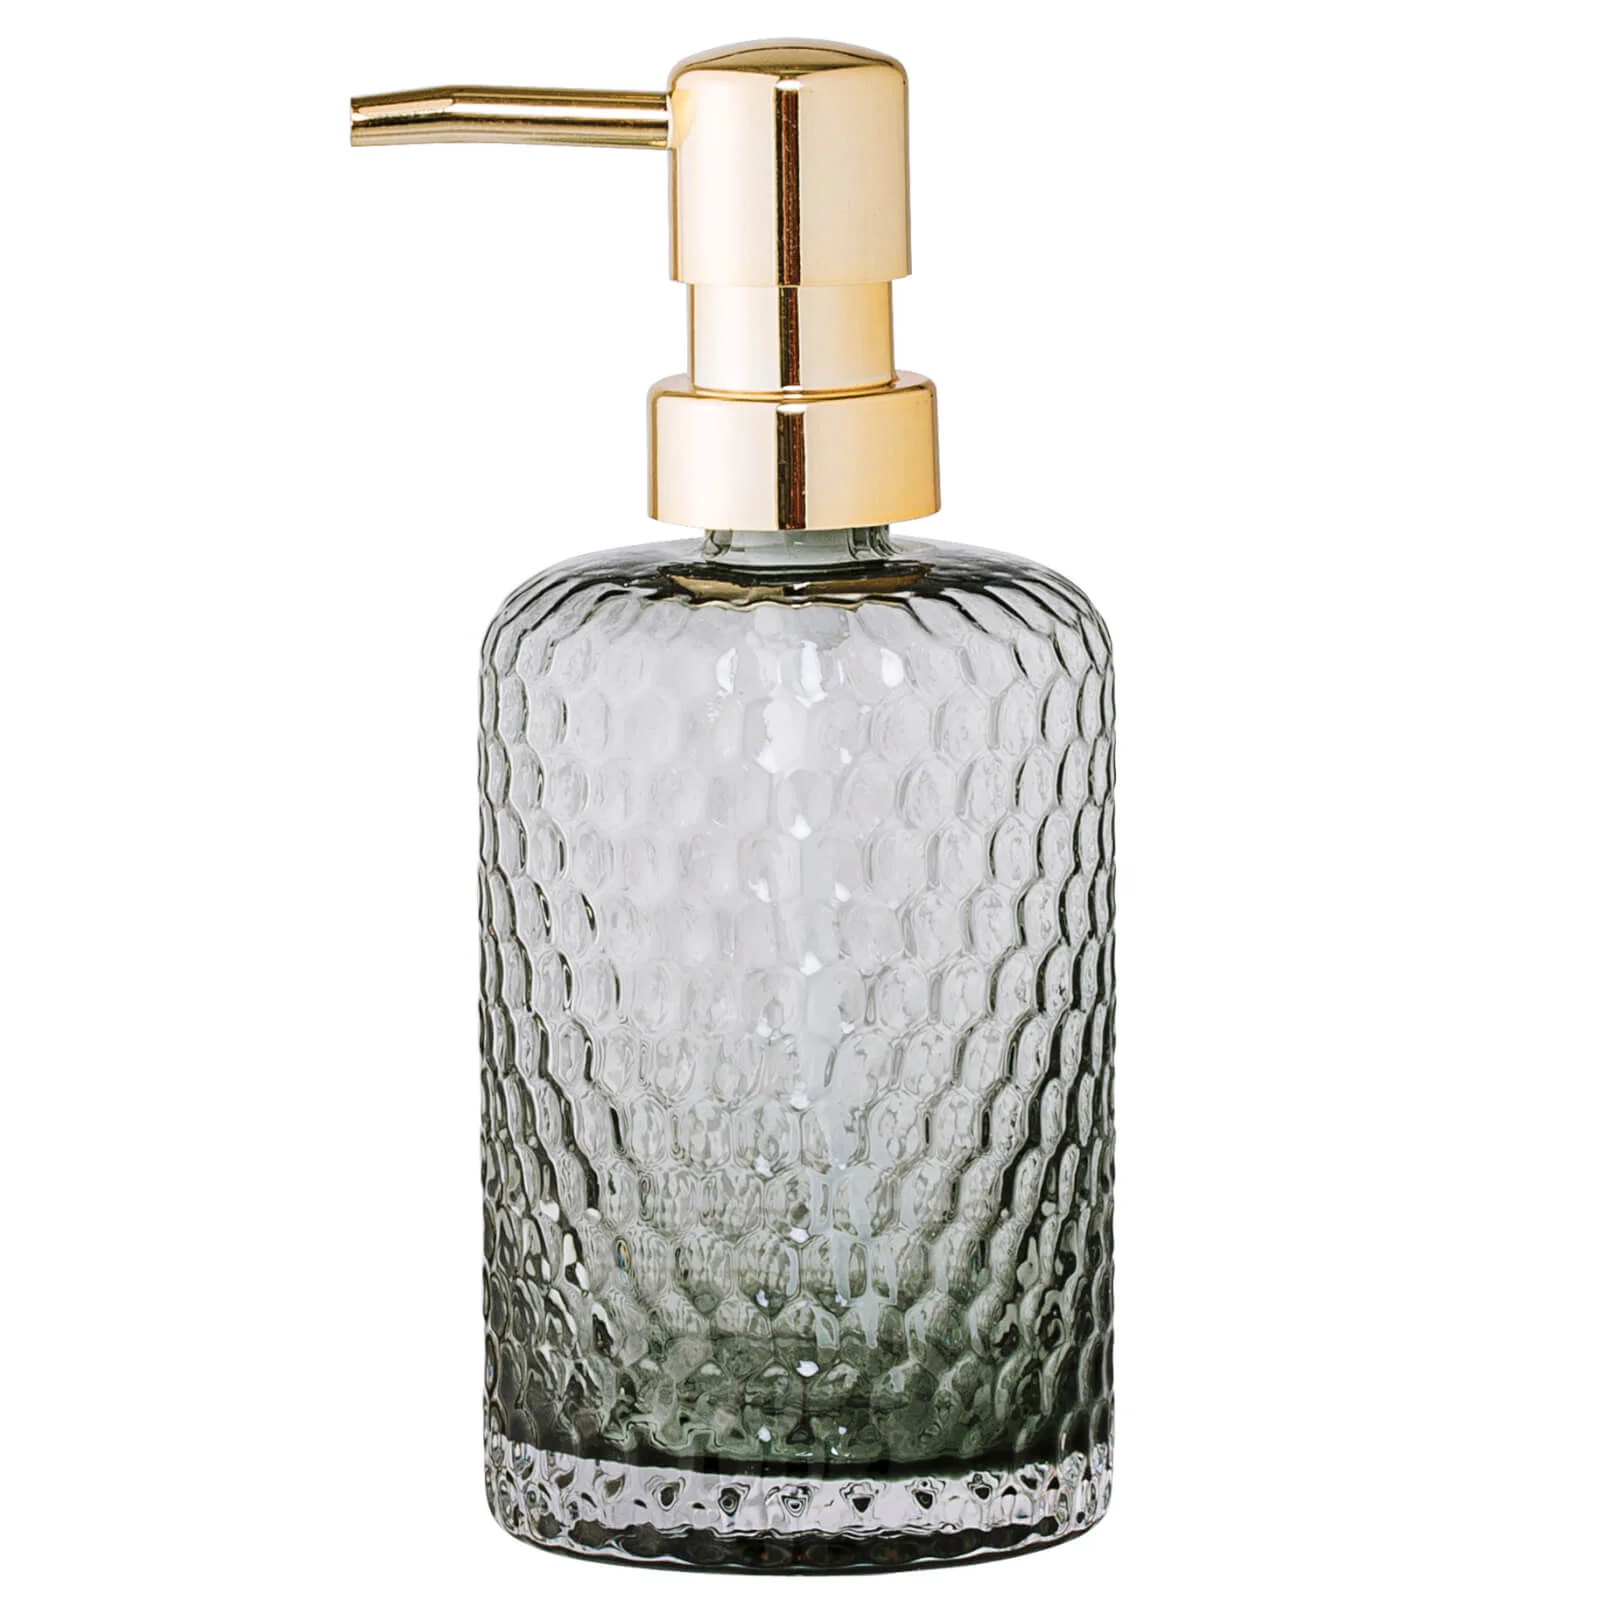 Bloomingville Glass Soap Dispenser Image 1